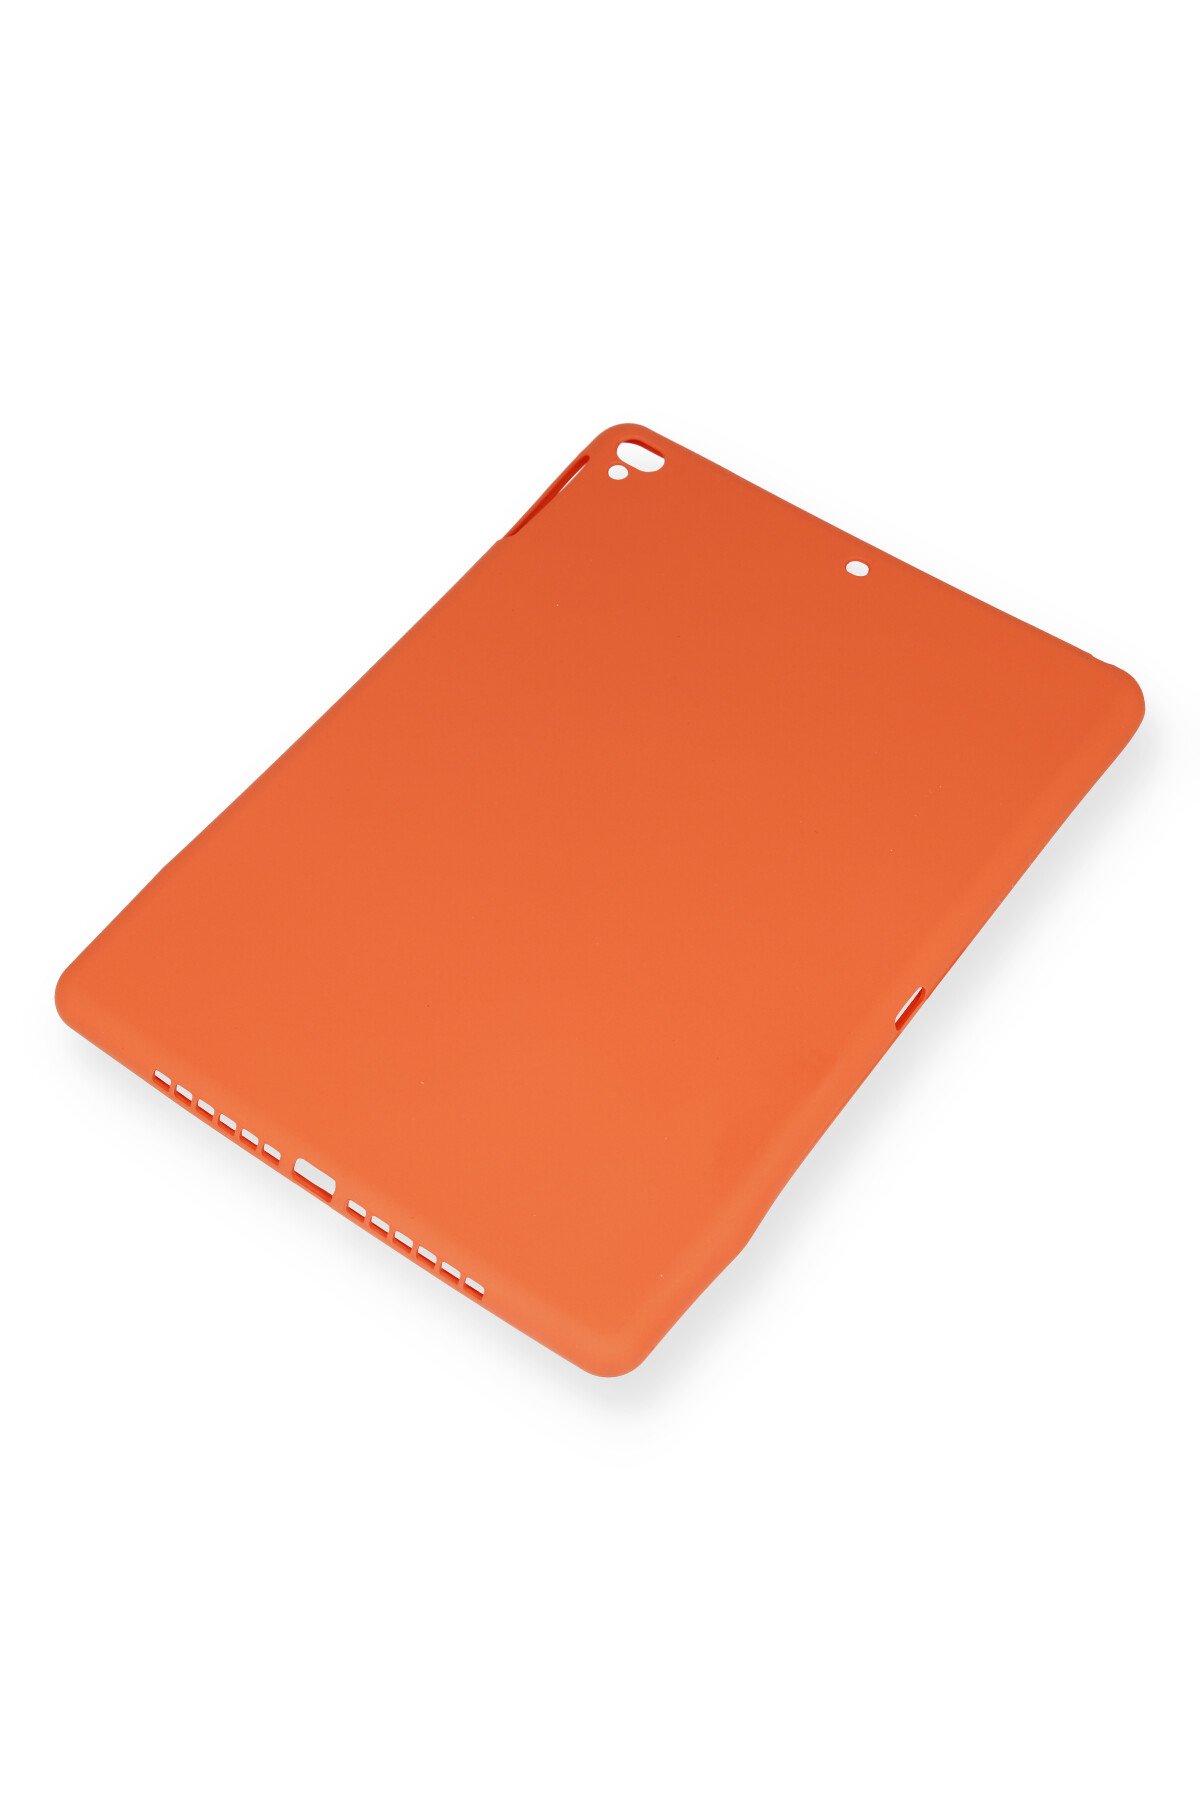 Newface iPad Air 2 9.7 Kılıf Amazing Tablet Kapak - Kamuflaj